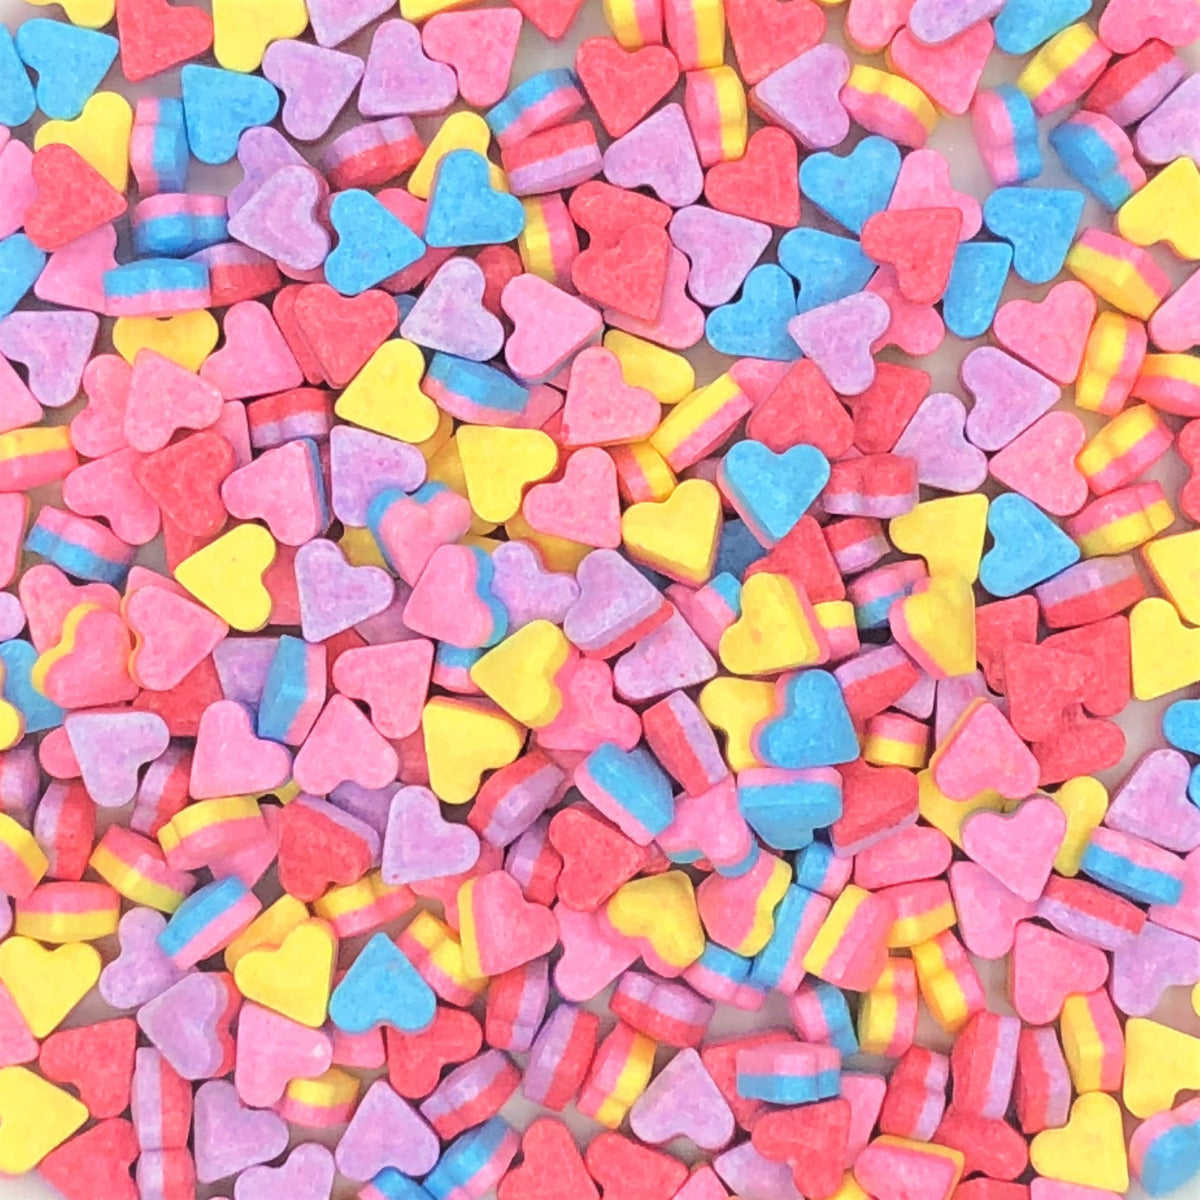 Candy Sprinkles